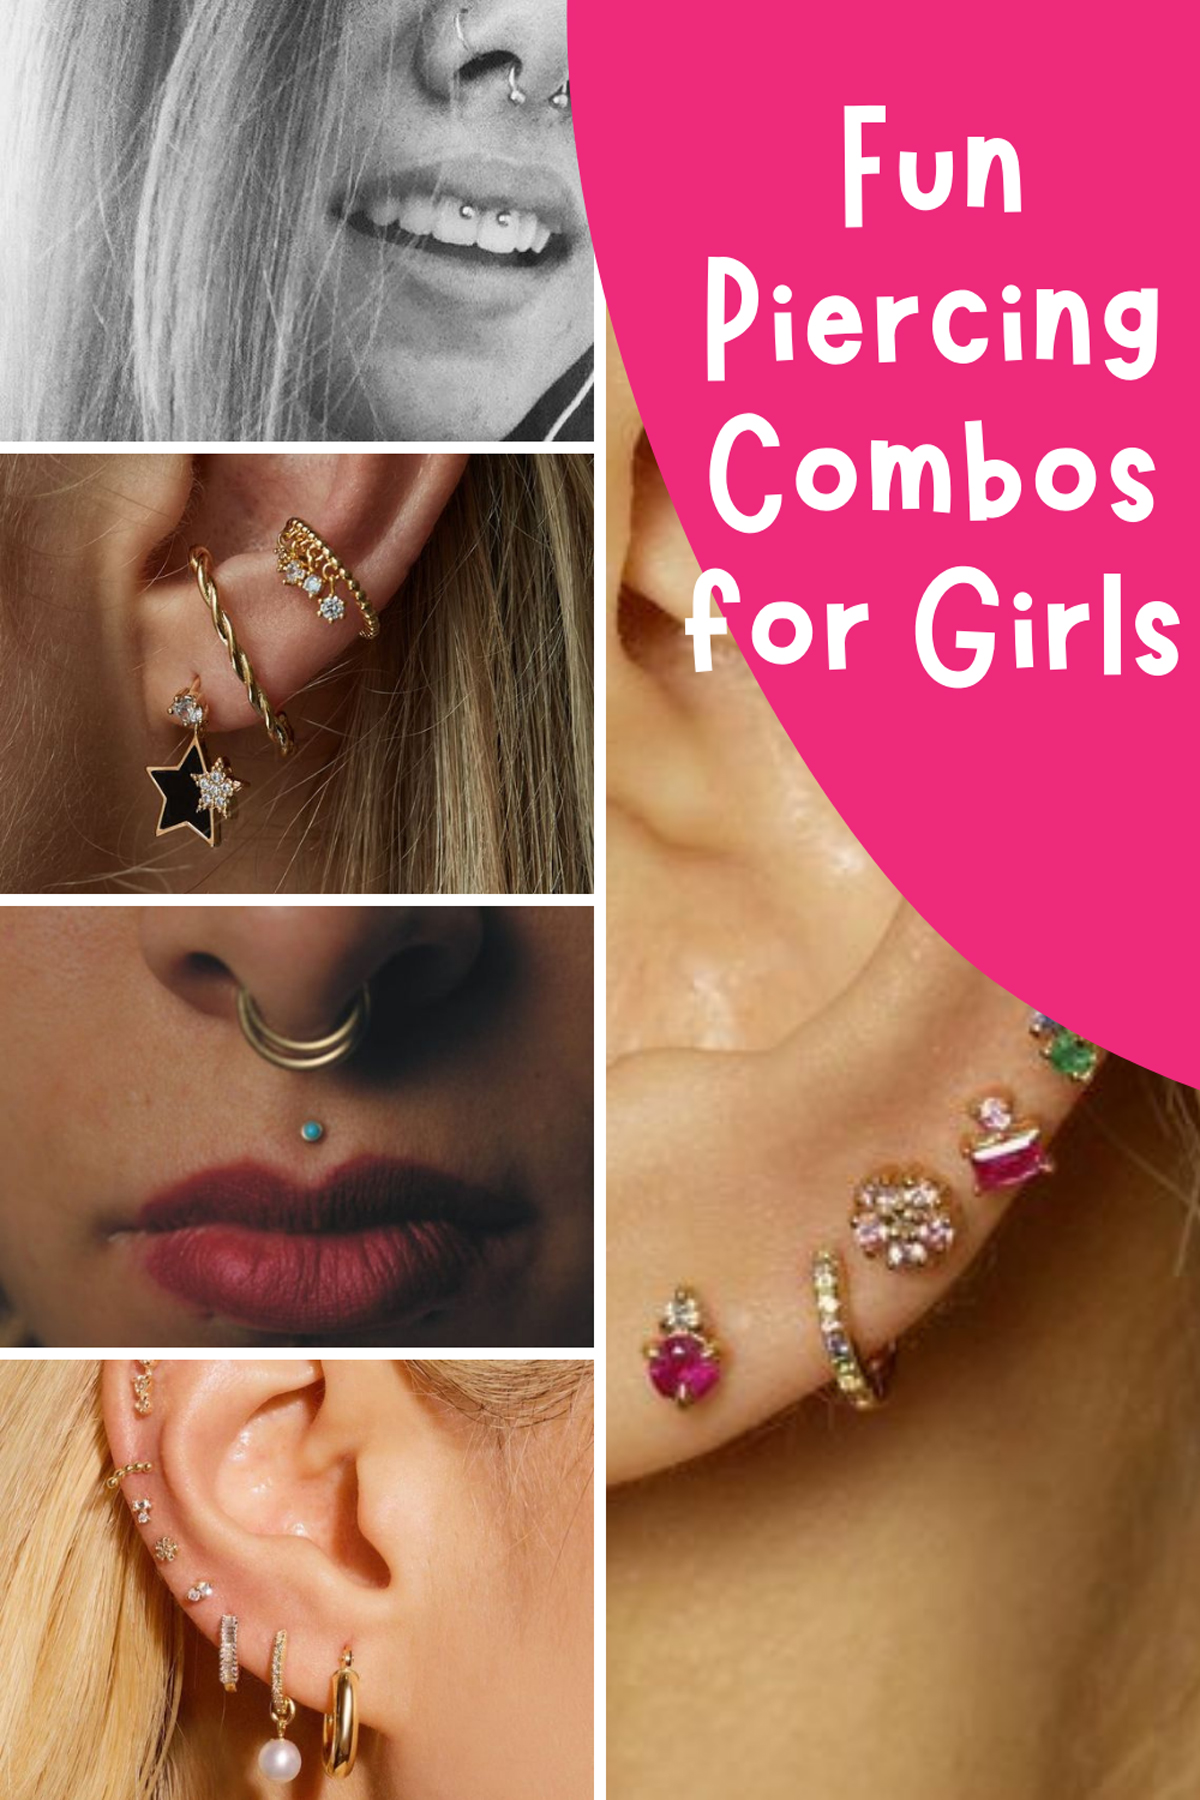 Fun Piercing Combos for Girls